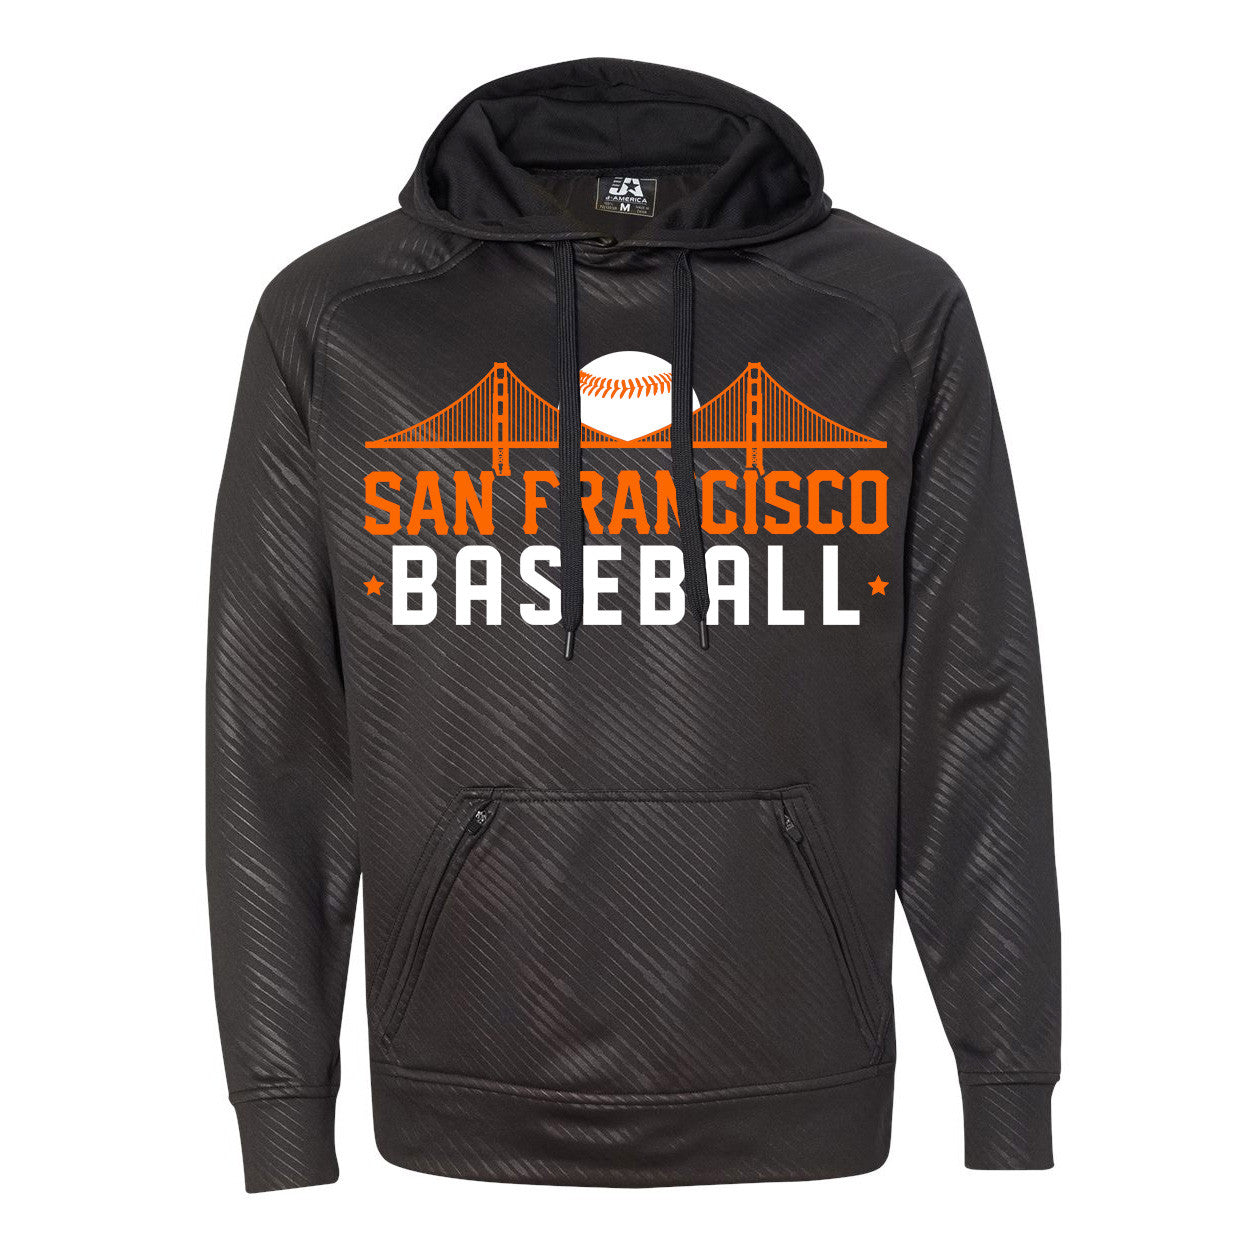 San Francisco Baseball Hoodie